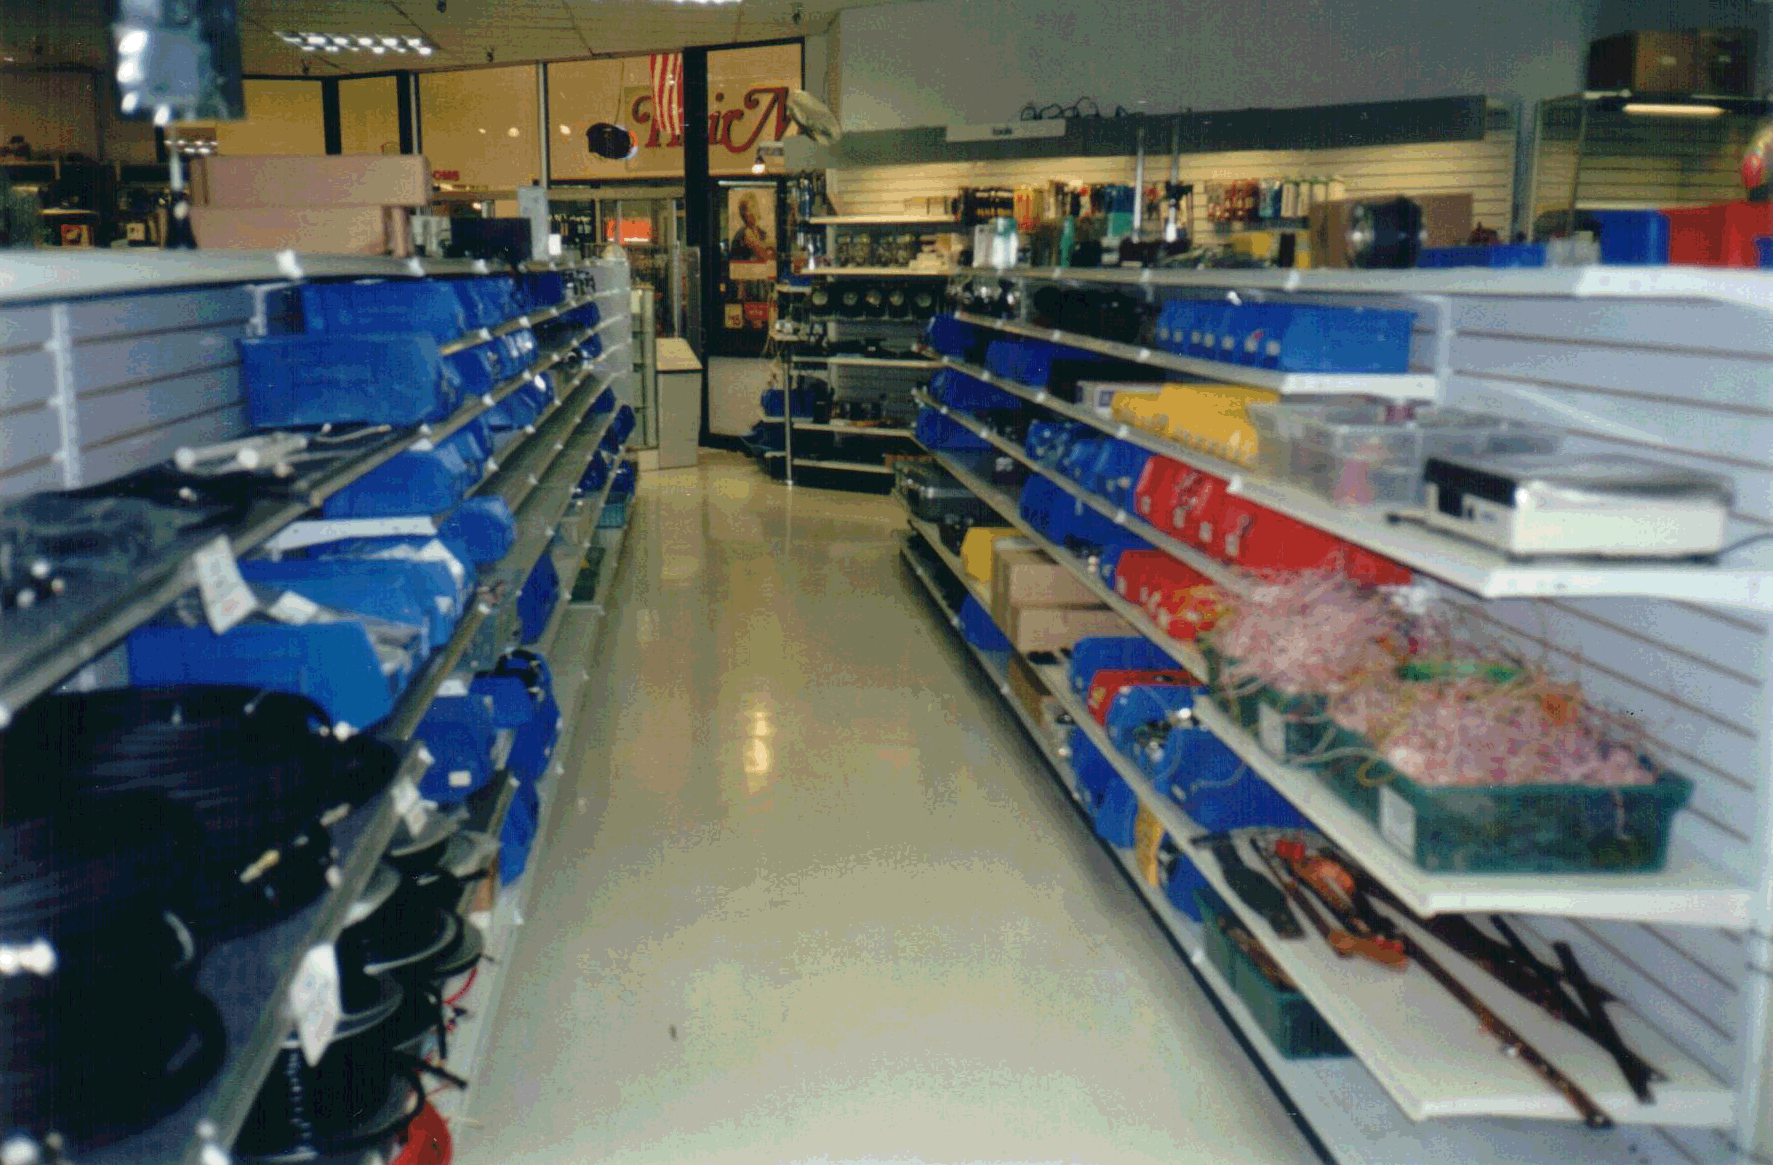 Store aisle